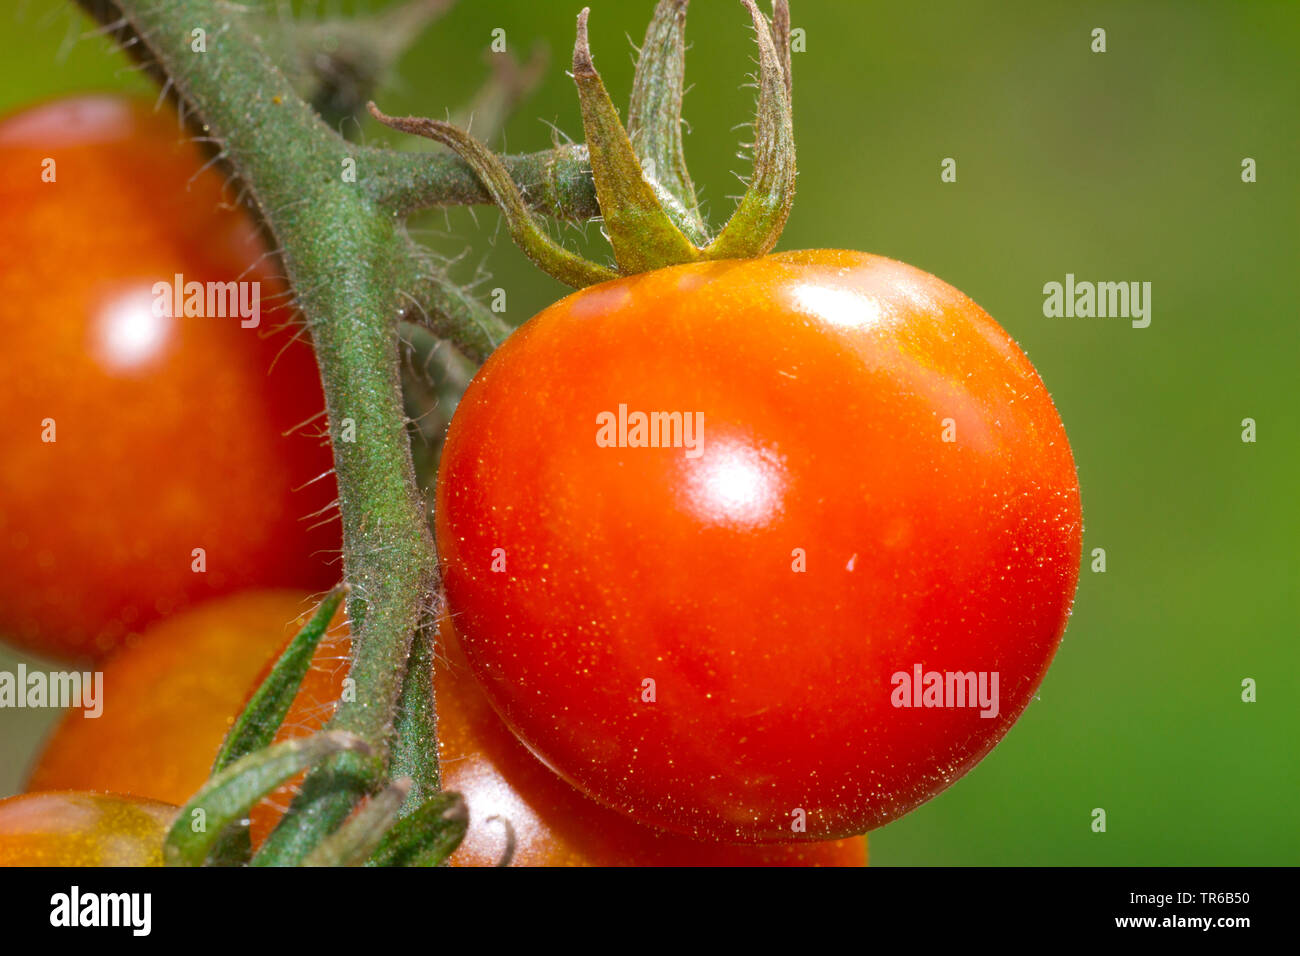 garden tomato (Solanum lycopersicum, Lycopersicon esculentum), green cherry tomato, cultivar Pepe, Germany Stock Photo